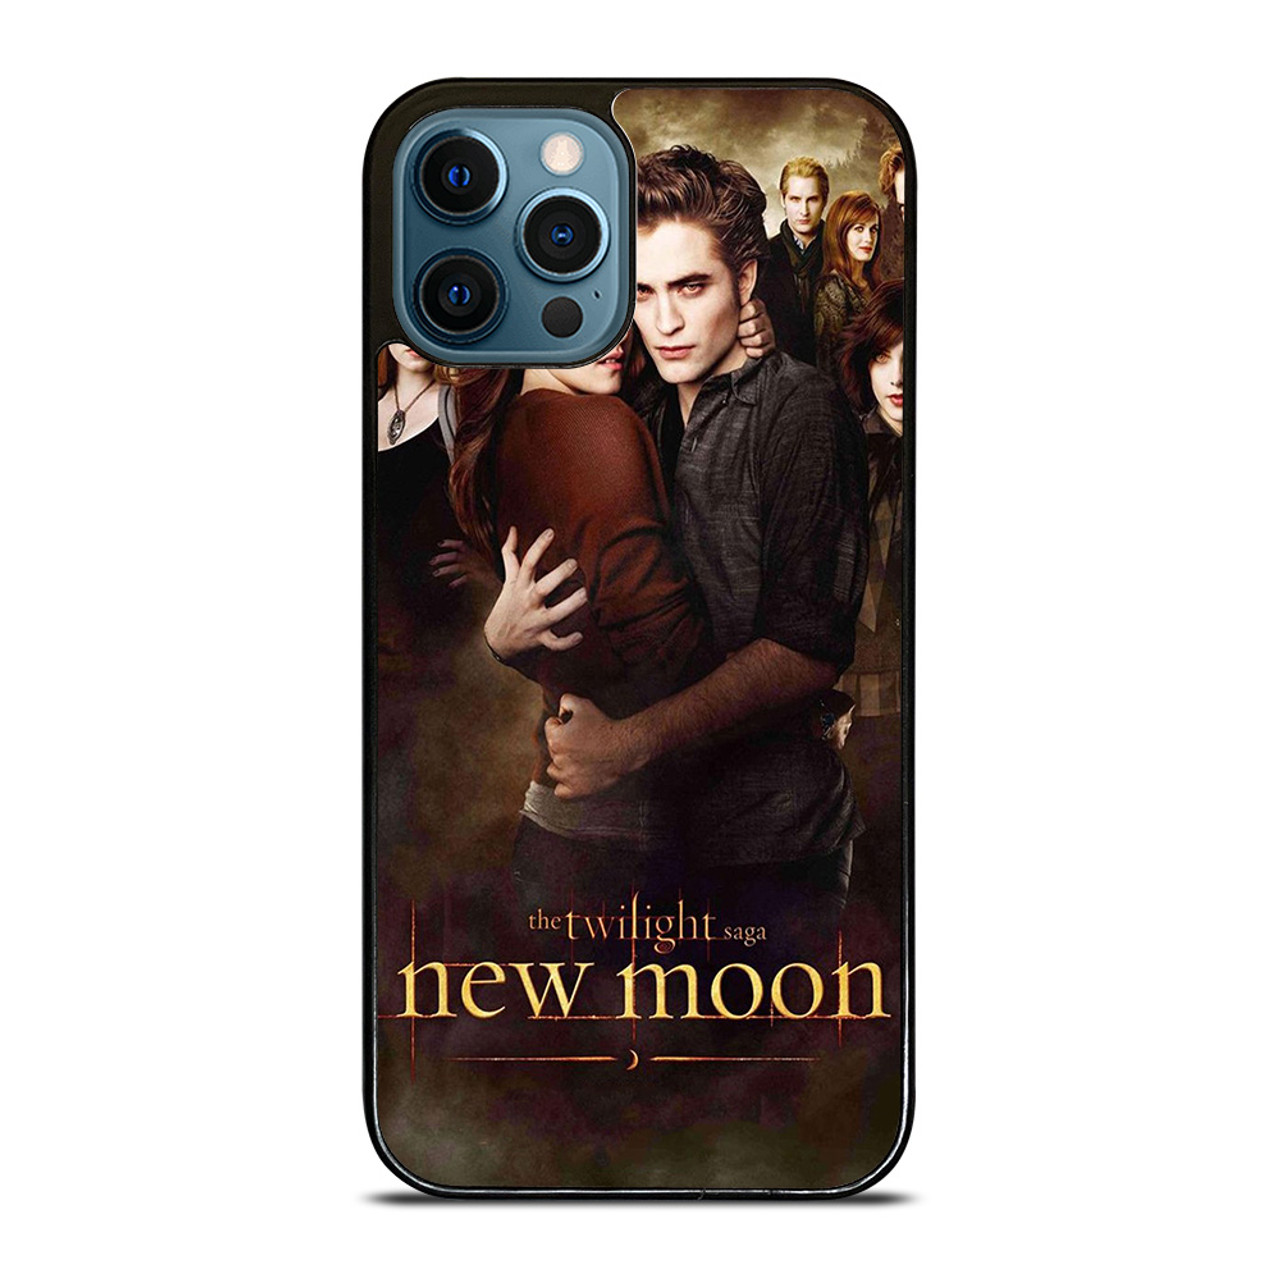 TWILIGHT SAGA NEW MOON iPhone 12 Pro Max Case Cover